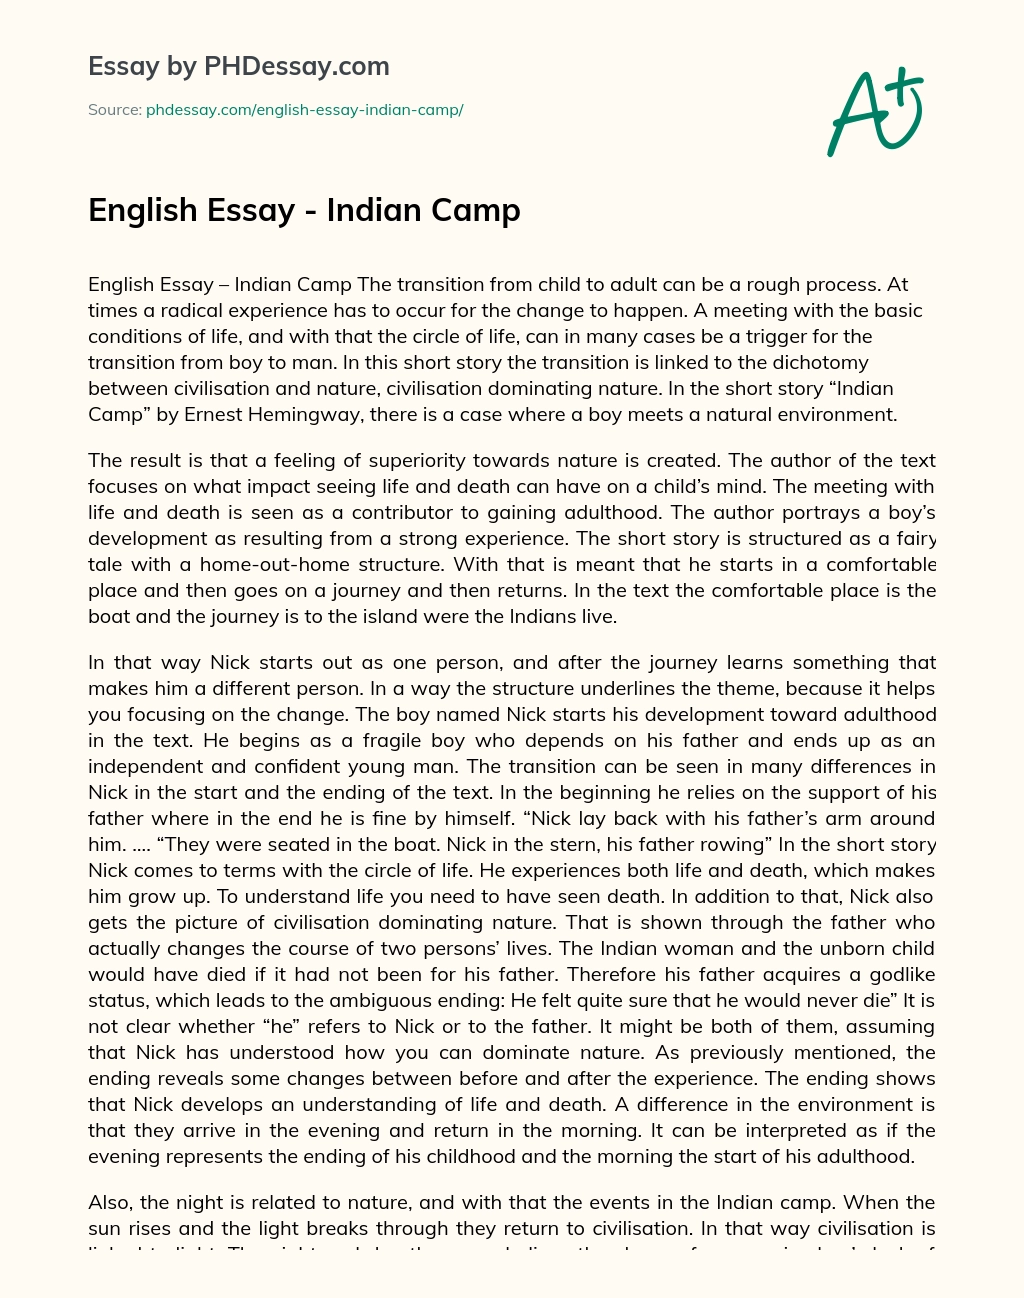 “Indian Camp” by Ernest Hemingway essay